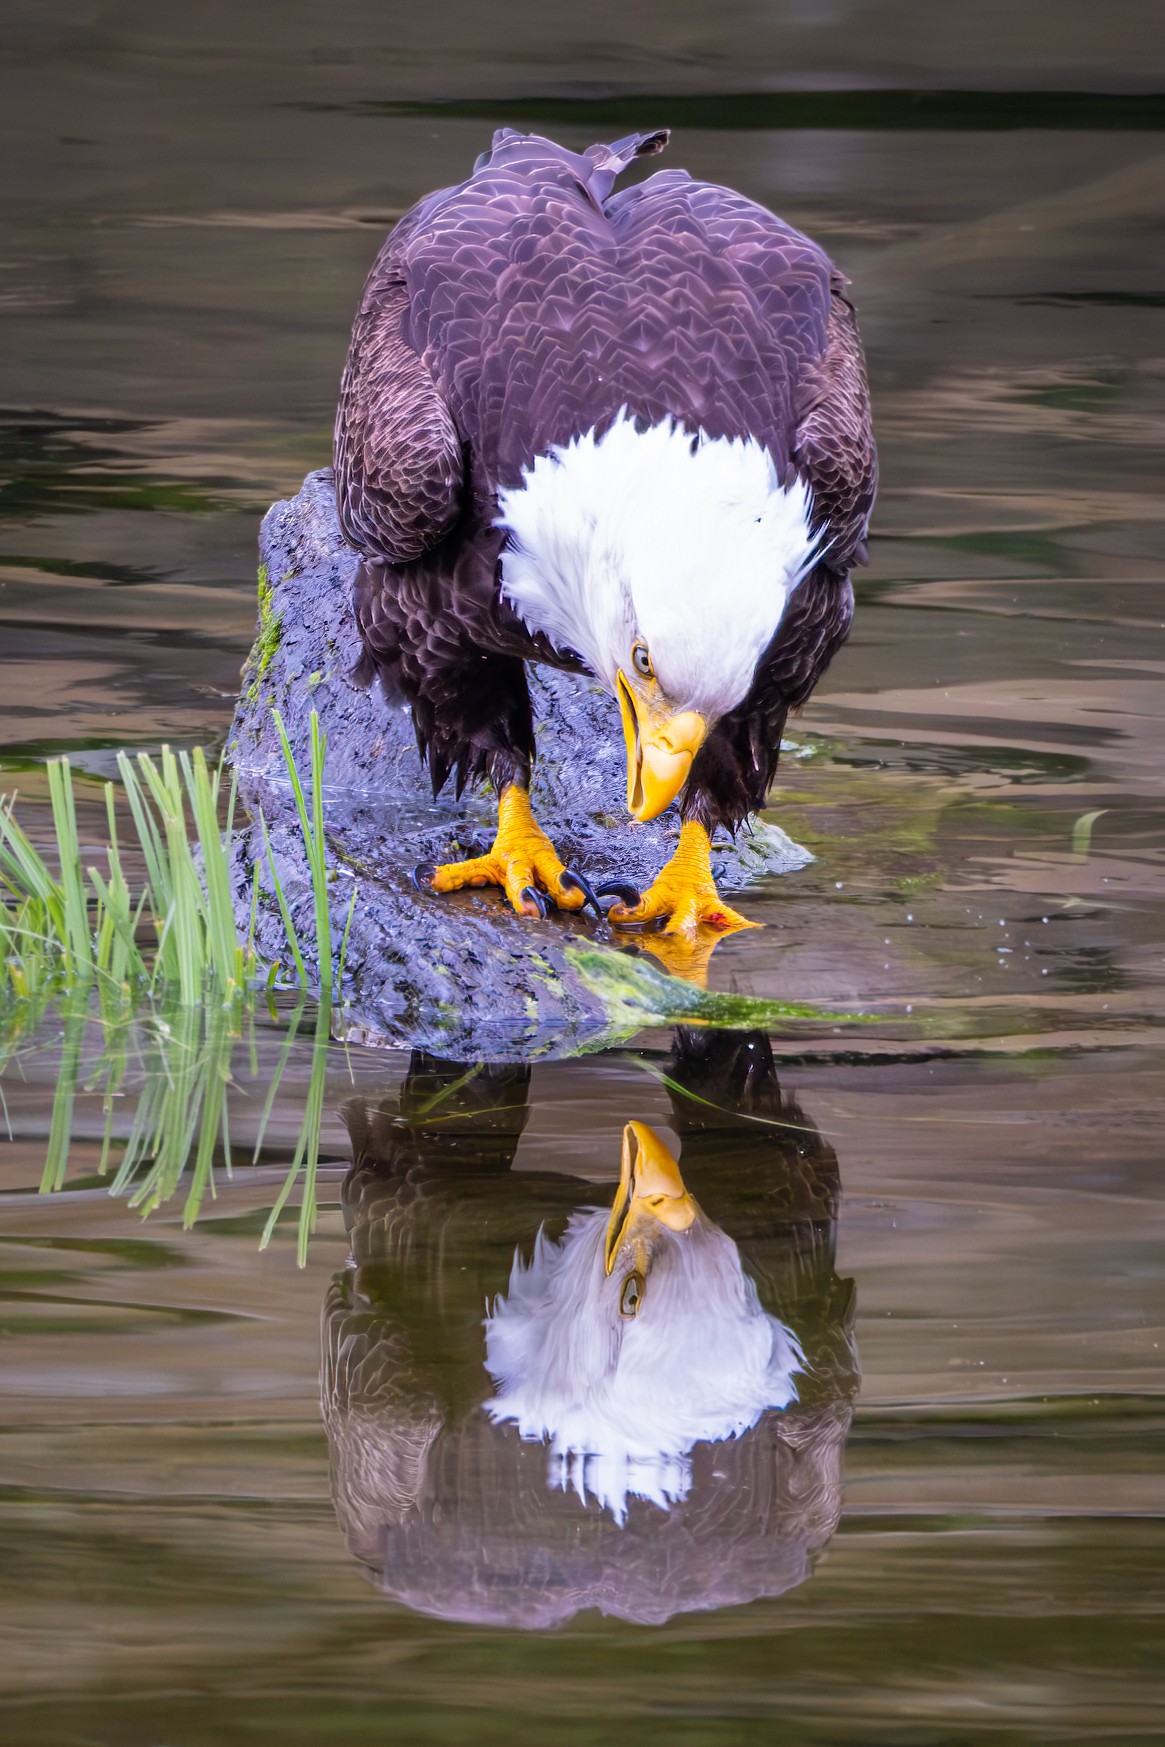 Eagle admiring itself